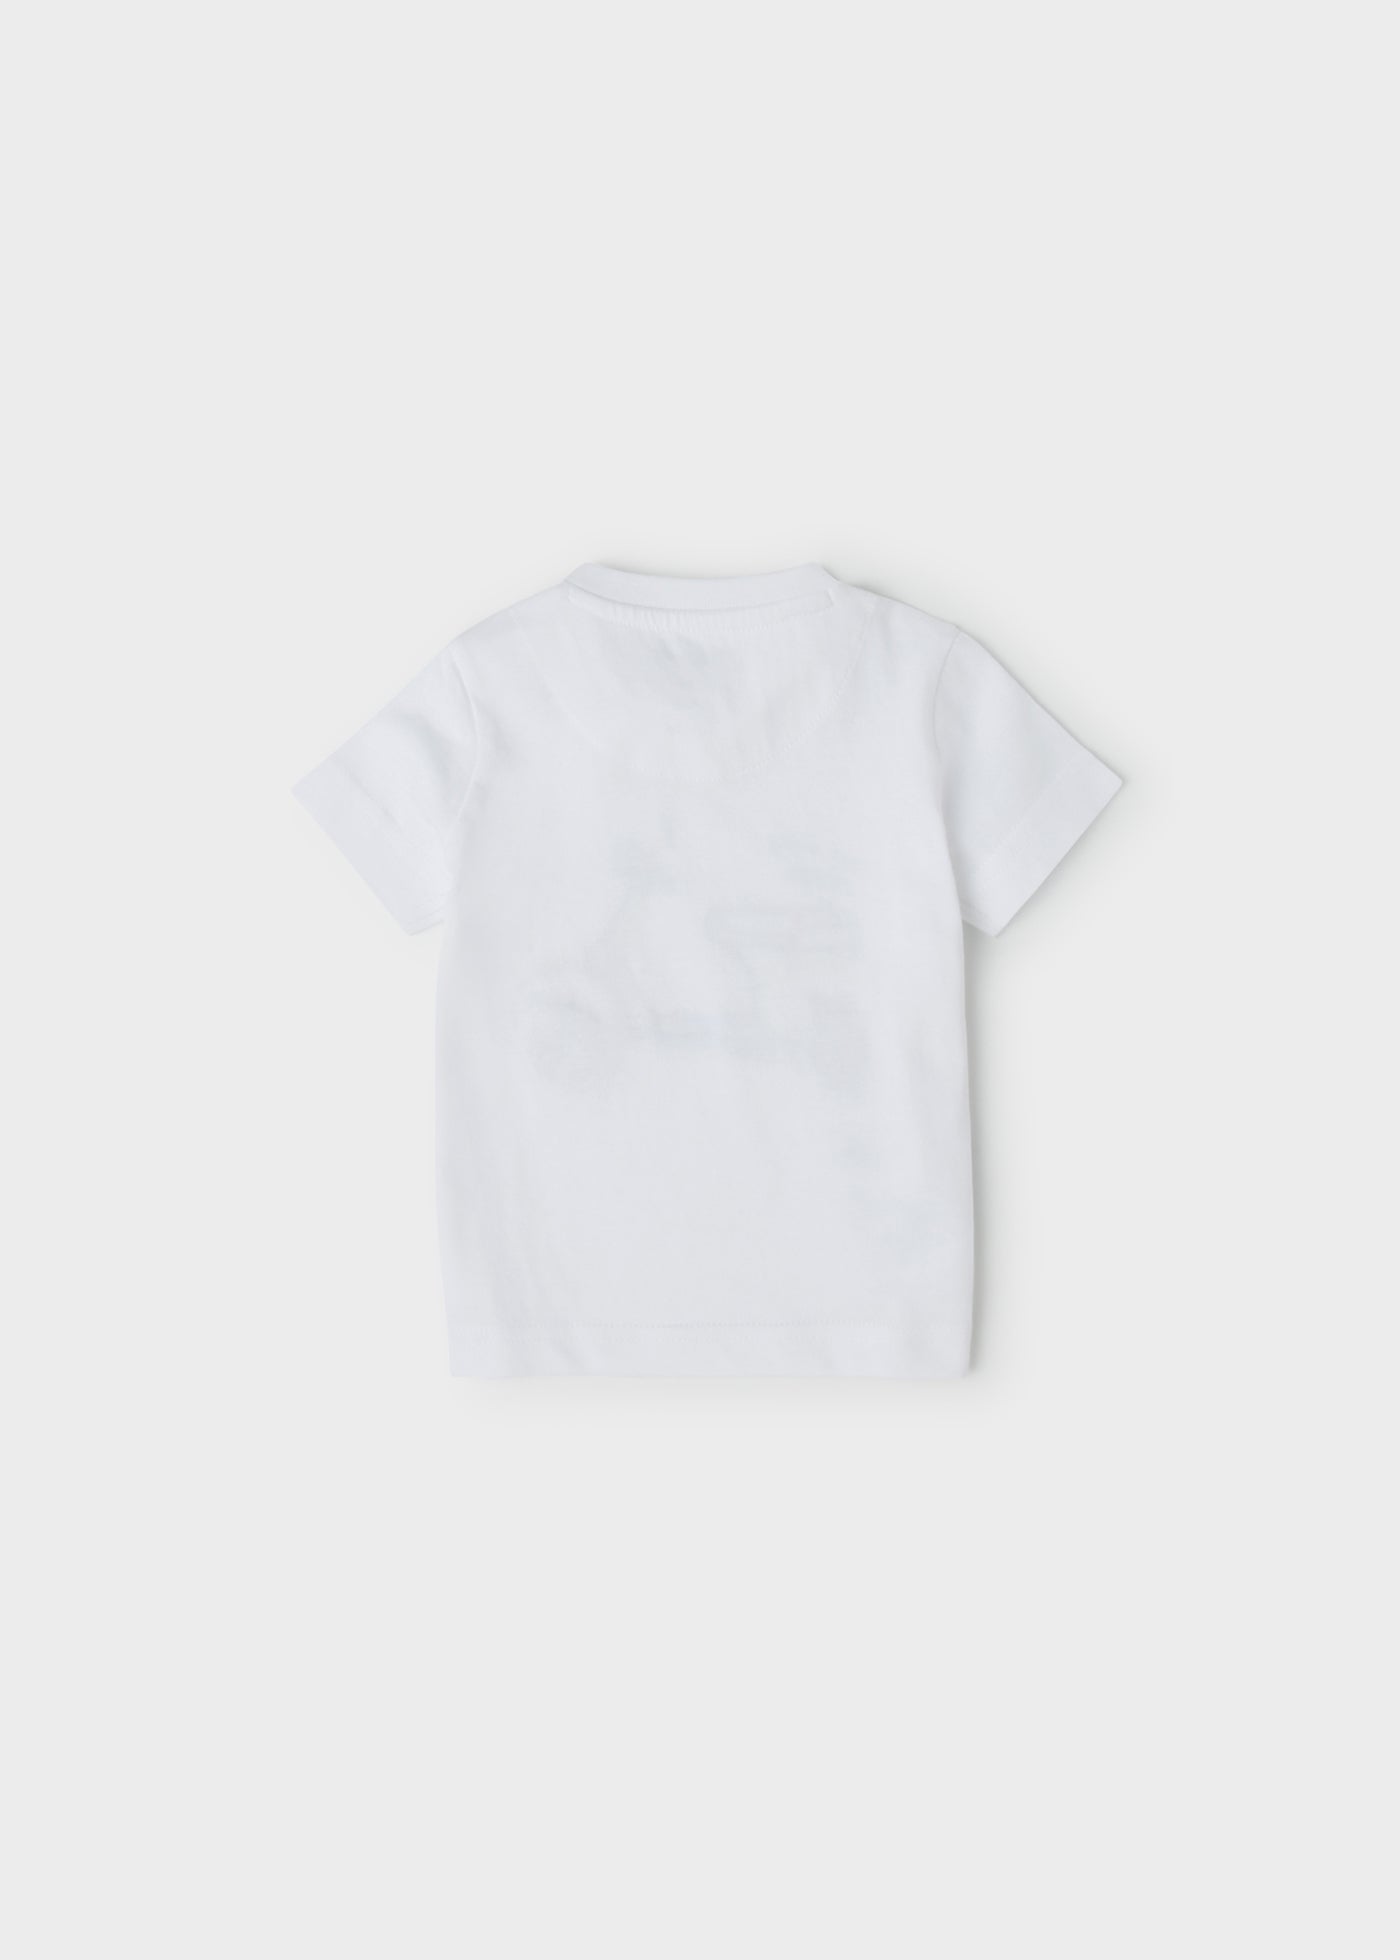 Mayoral Baby T-Shirt w/Print _White 1004-36